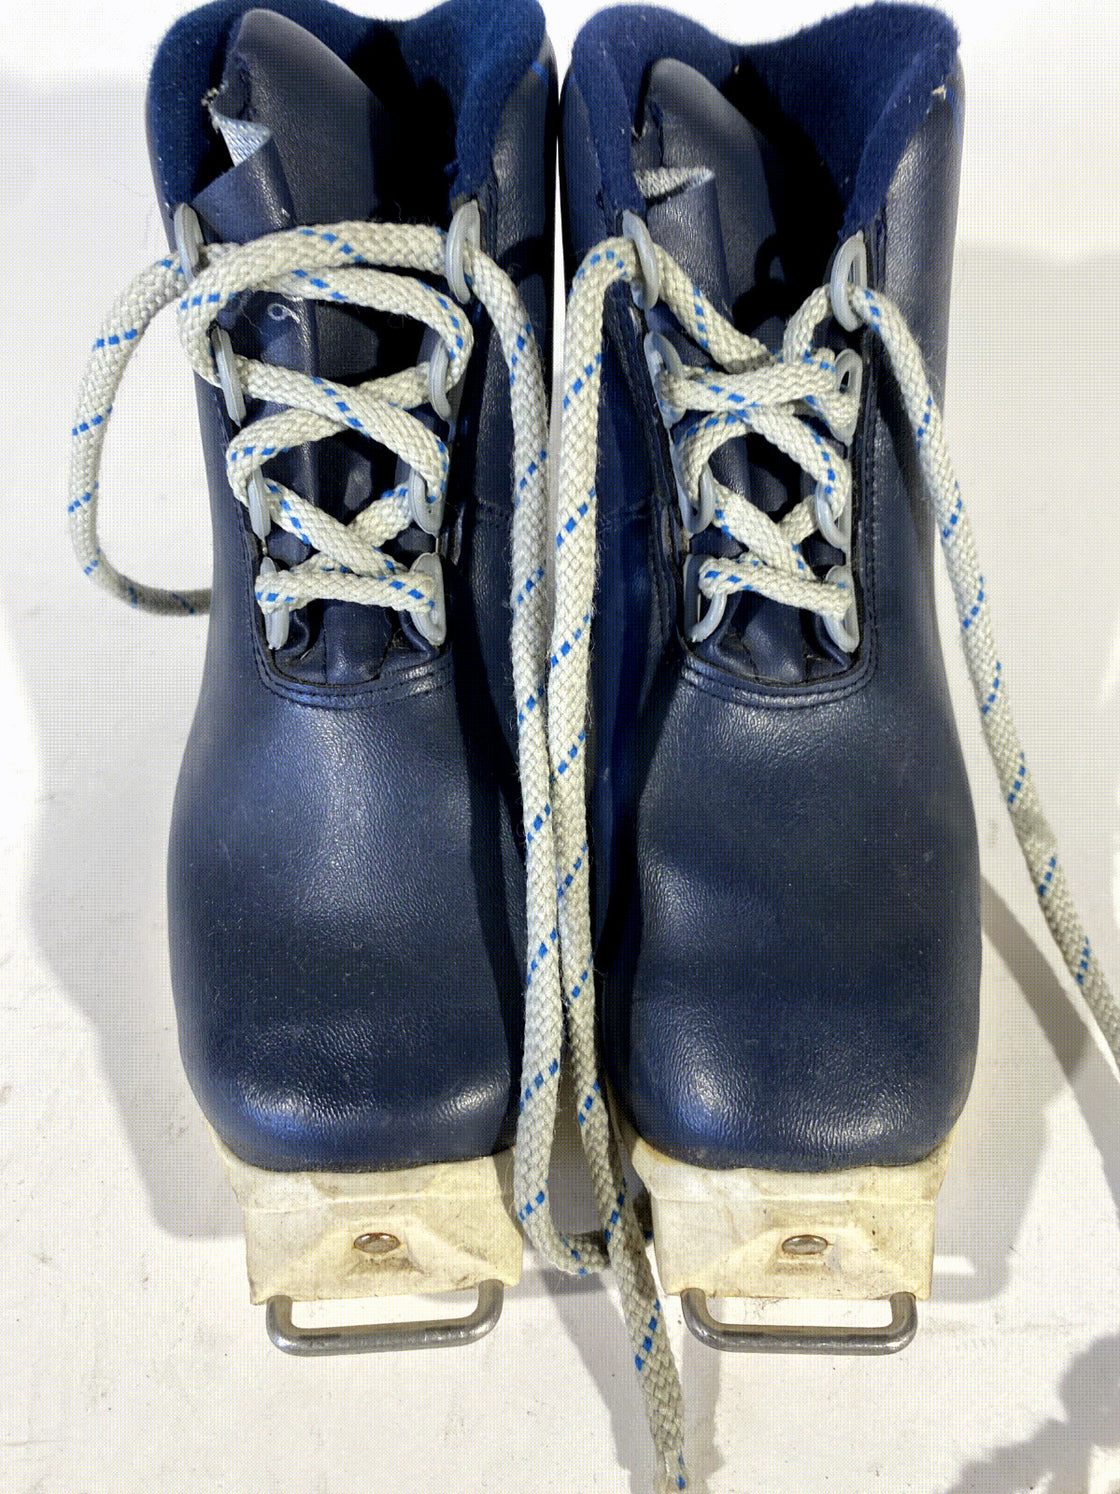 TECNO TC60 Cross Country Ski Boots Size EU34 US2 for SNS Old Bindings